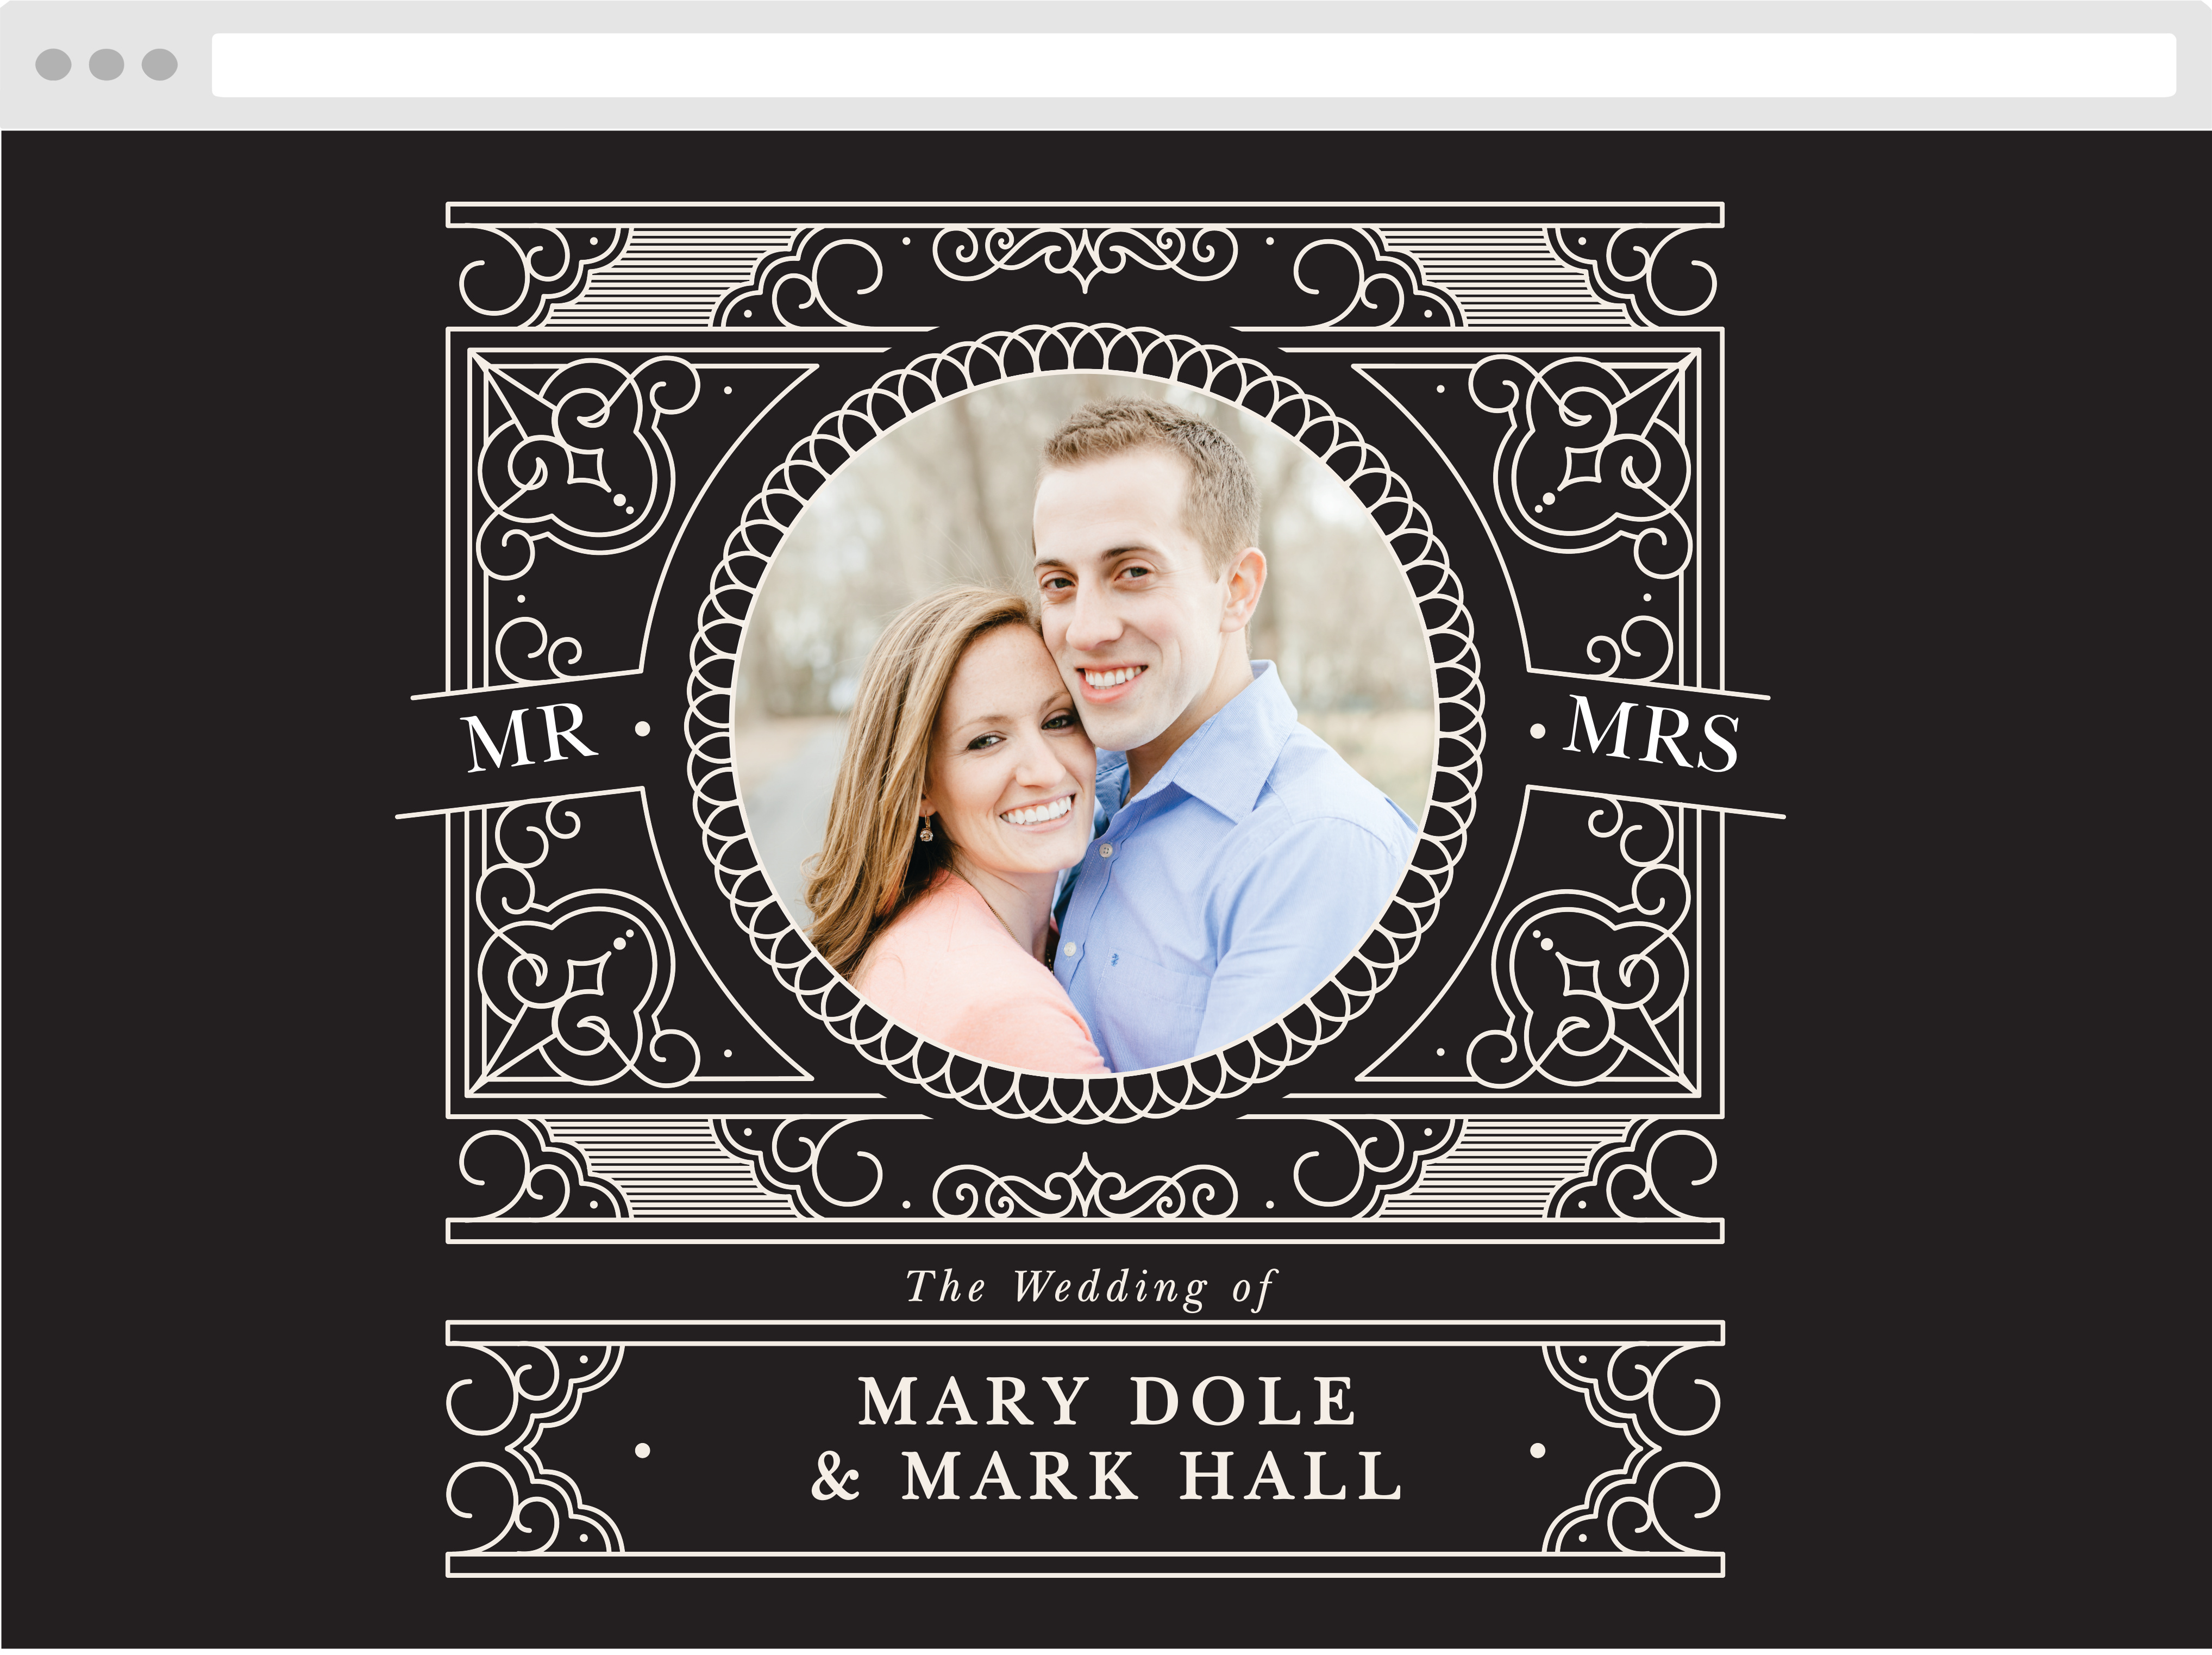 Our Union Wedding Website